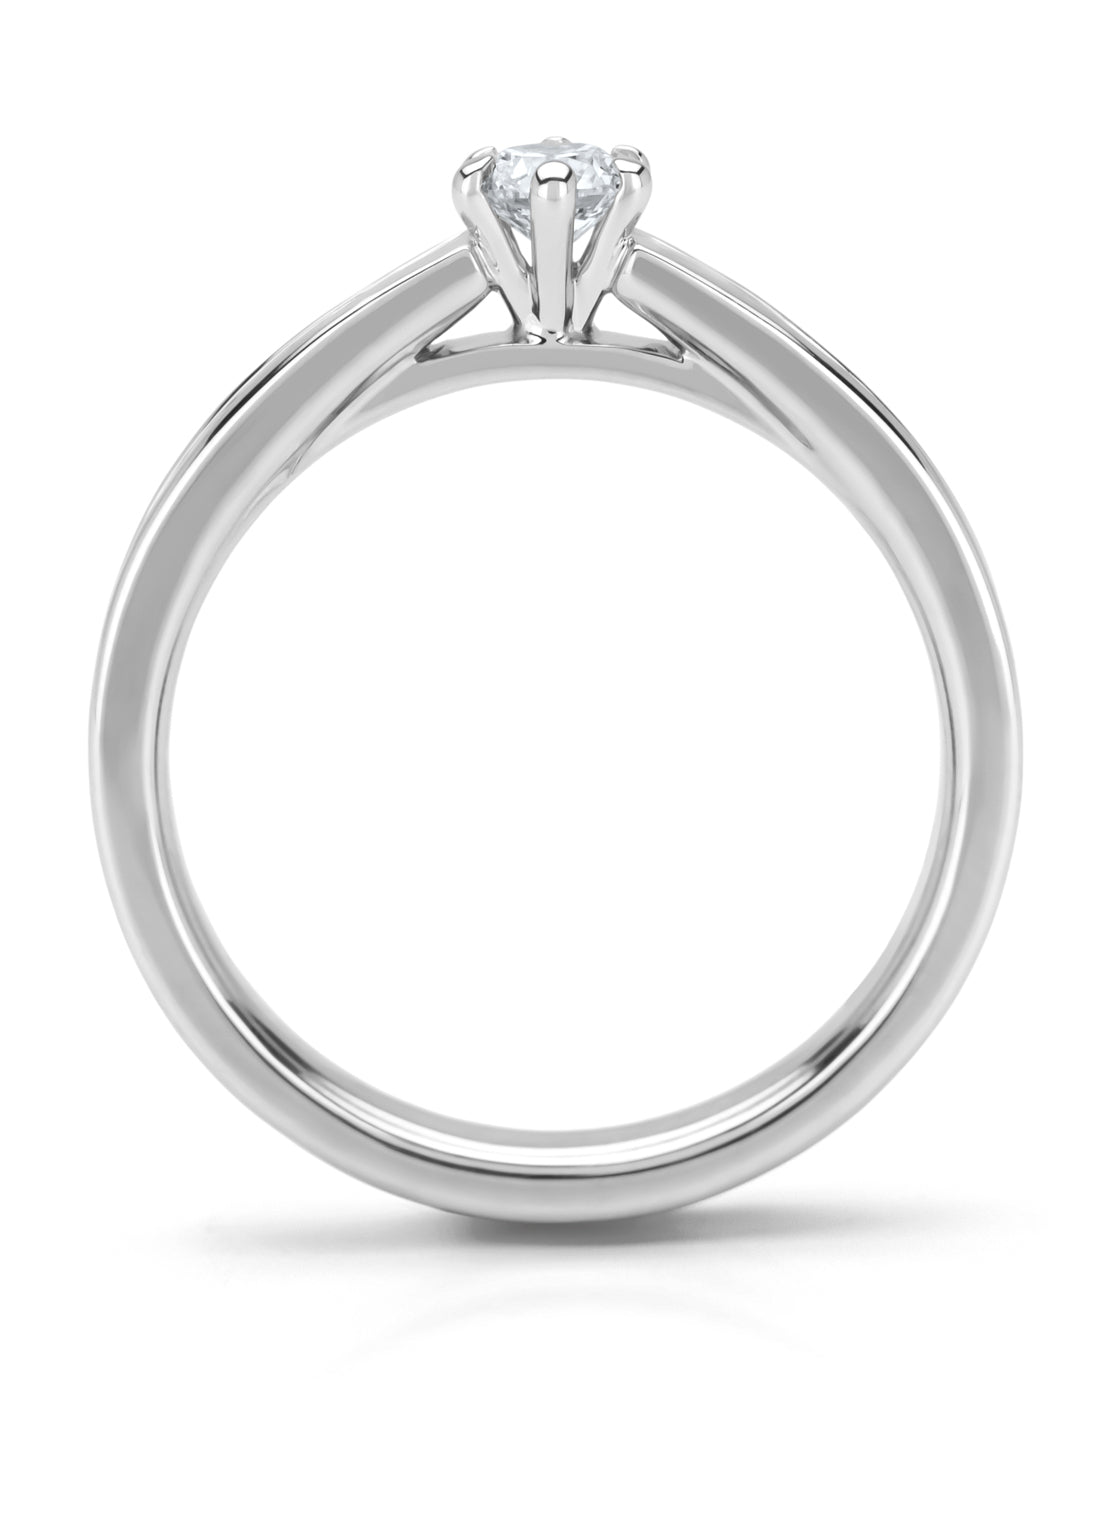 White gold ring, 0.47 ct diamond, solitary